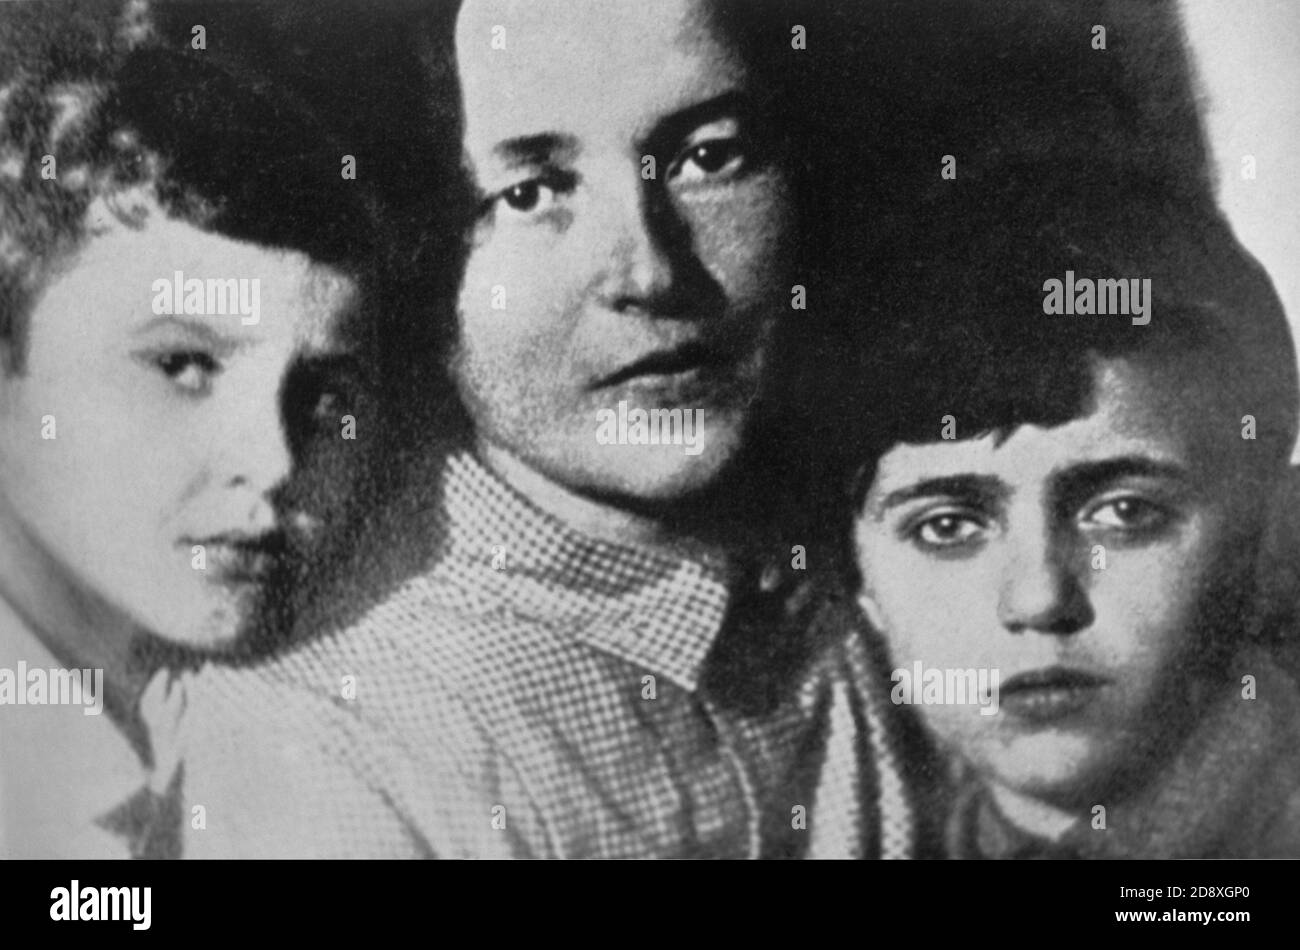 1930 's : GIULIA SCHUCHT , russische Frau des italienischen kommunistischen Intellektuellen ANTONIO GRAMSCI ( 1891 - 1937 ) , mit Söhnen DELIO und GIULIANO - PARTITO COMUNISTA ITALIANO - PCI - POLITICO - POLITIKER - POLITICA - POLITIC ---- Archivio GBB Stockfoto